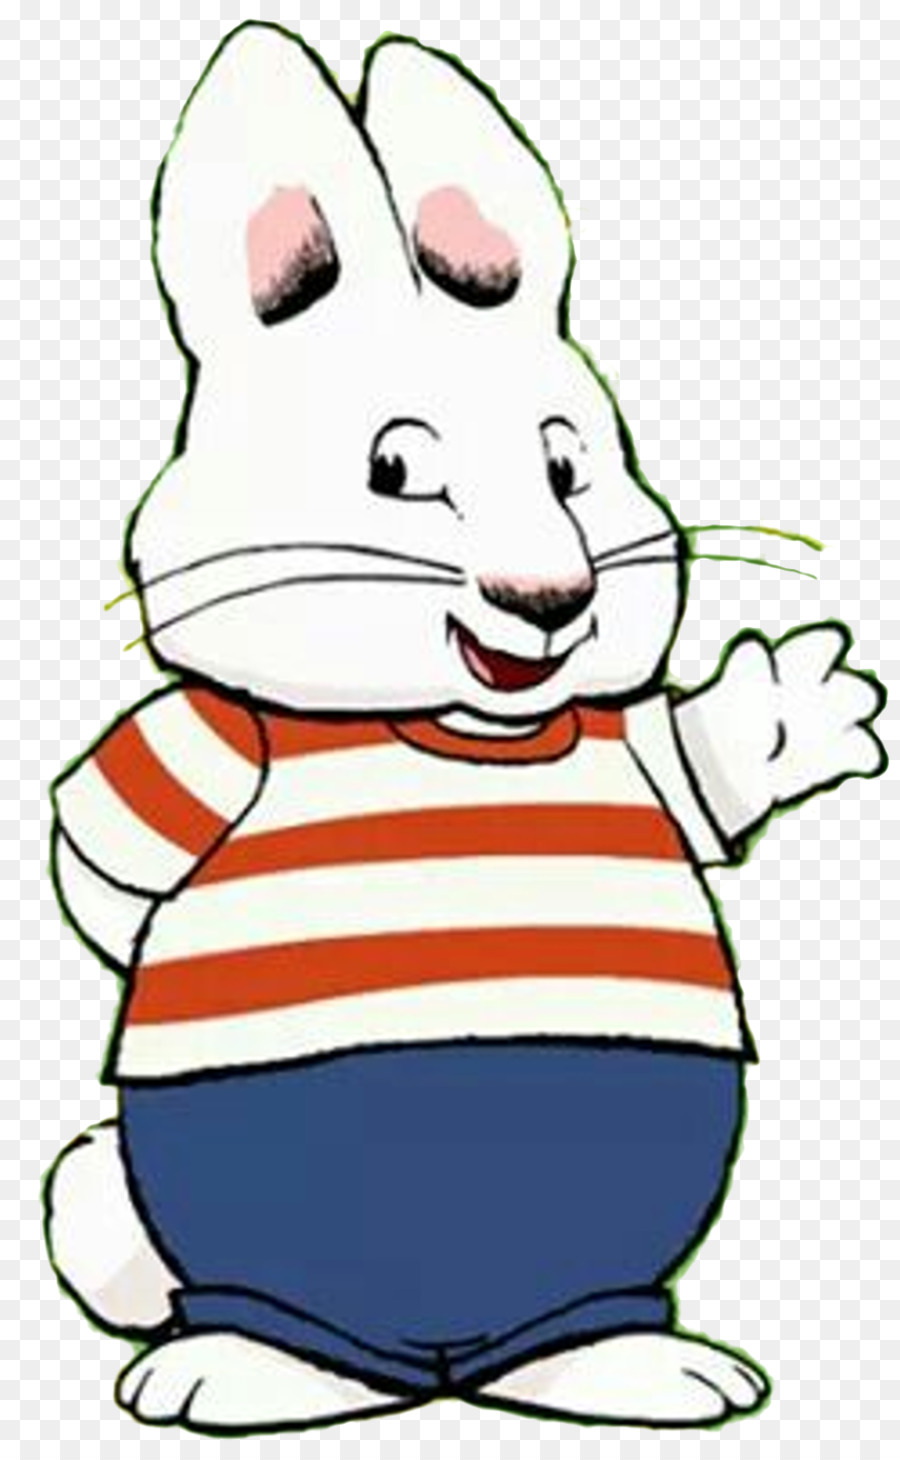 Bunny Cartoon clipart.